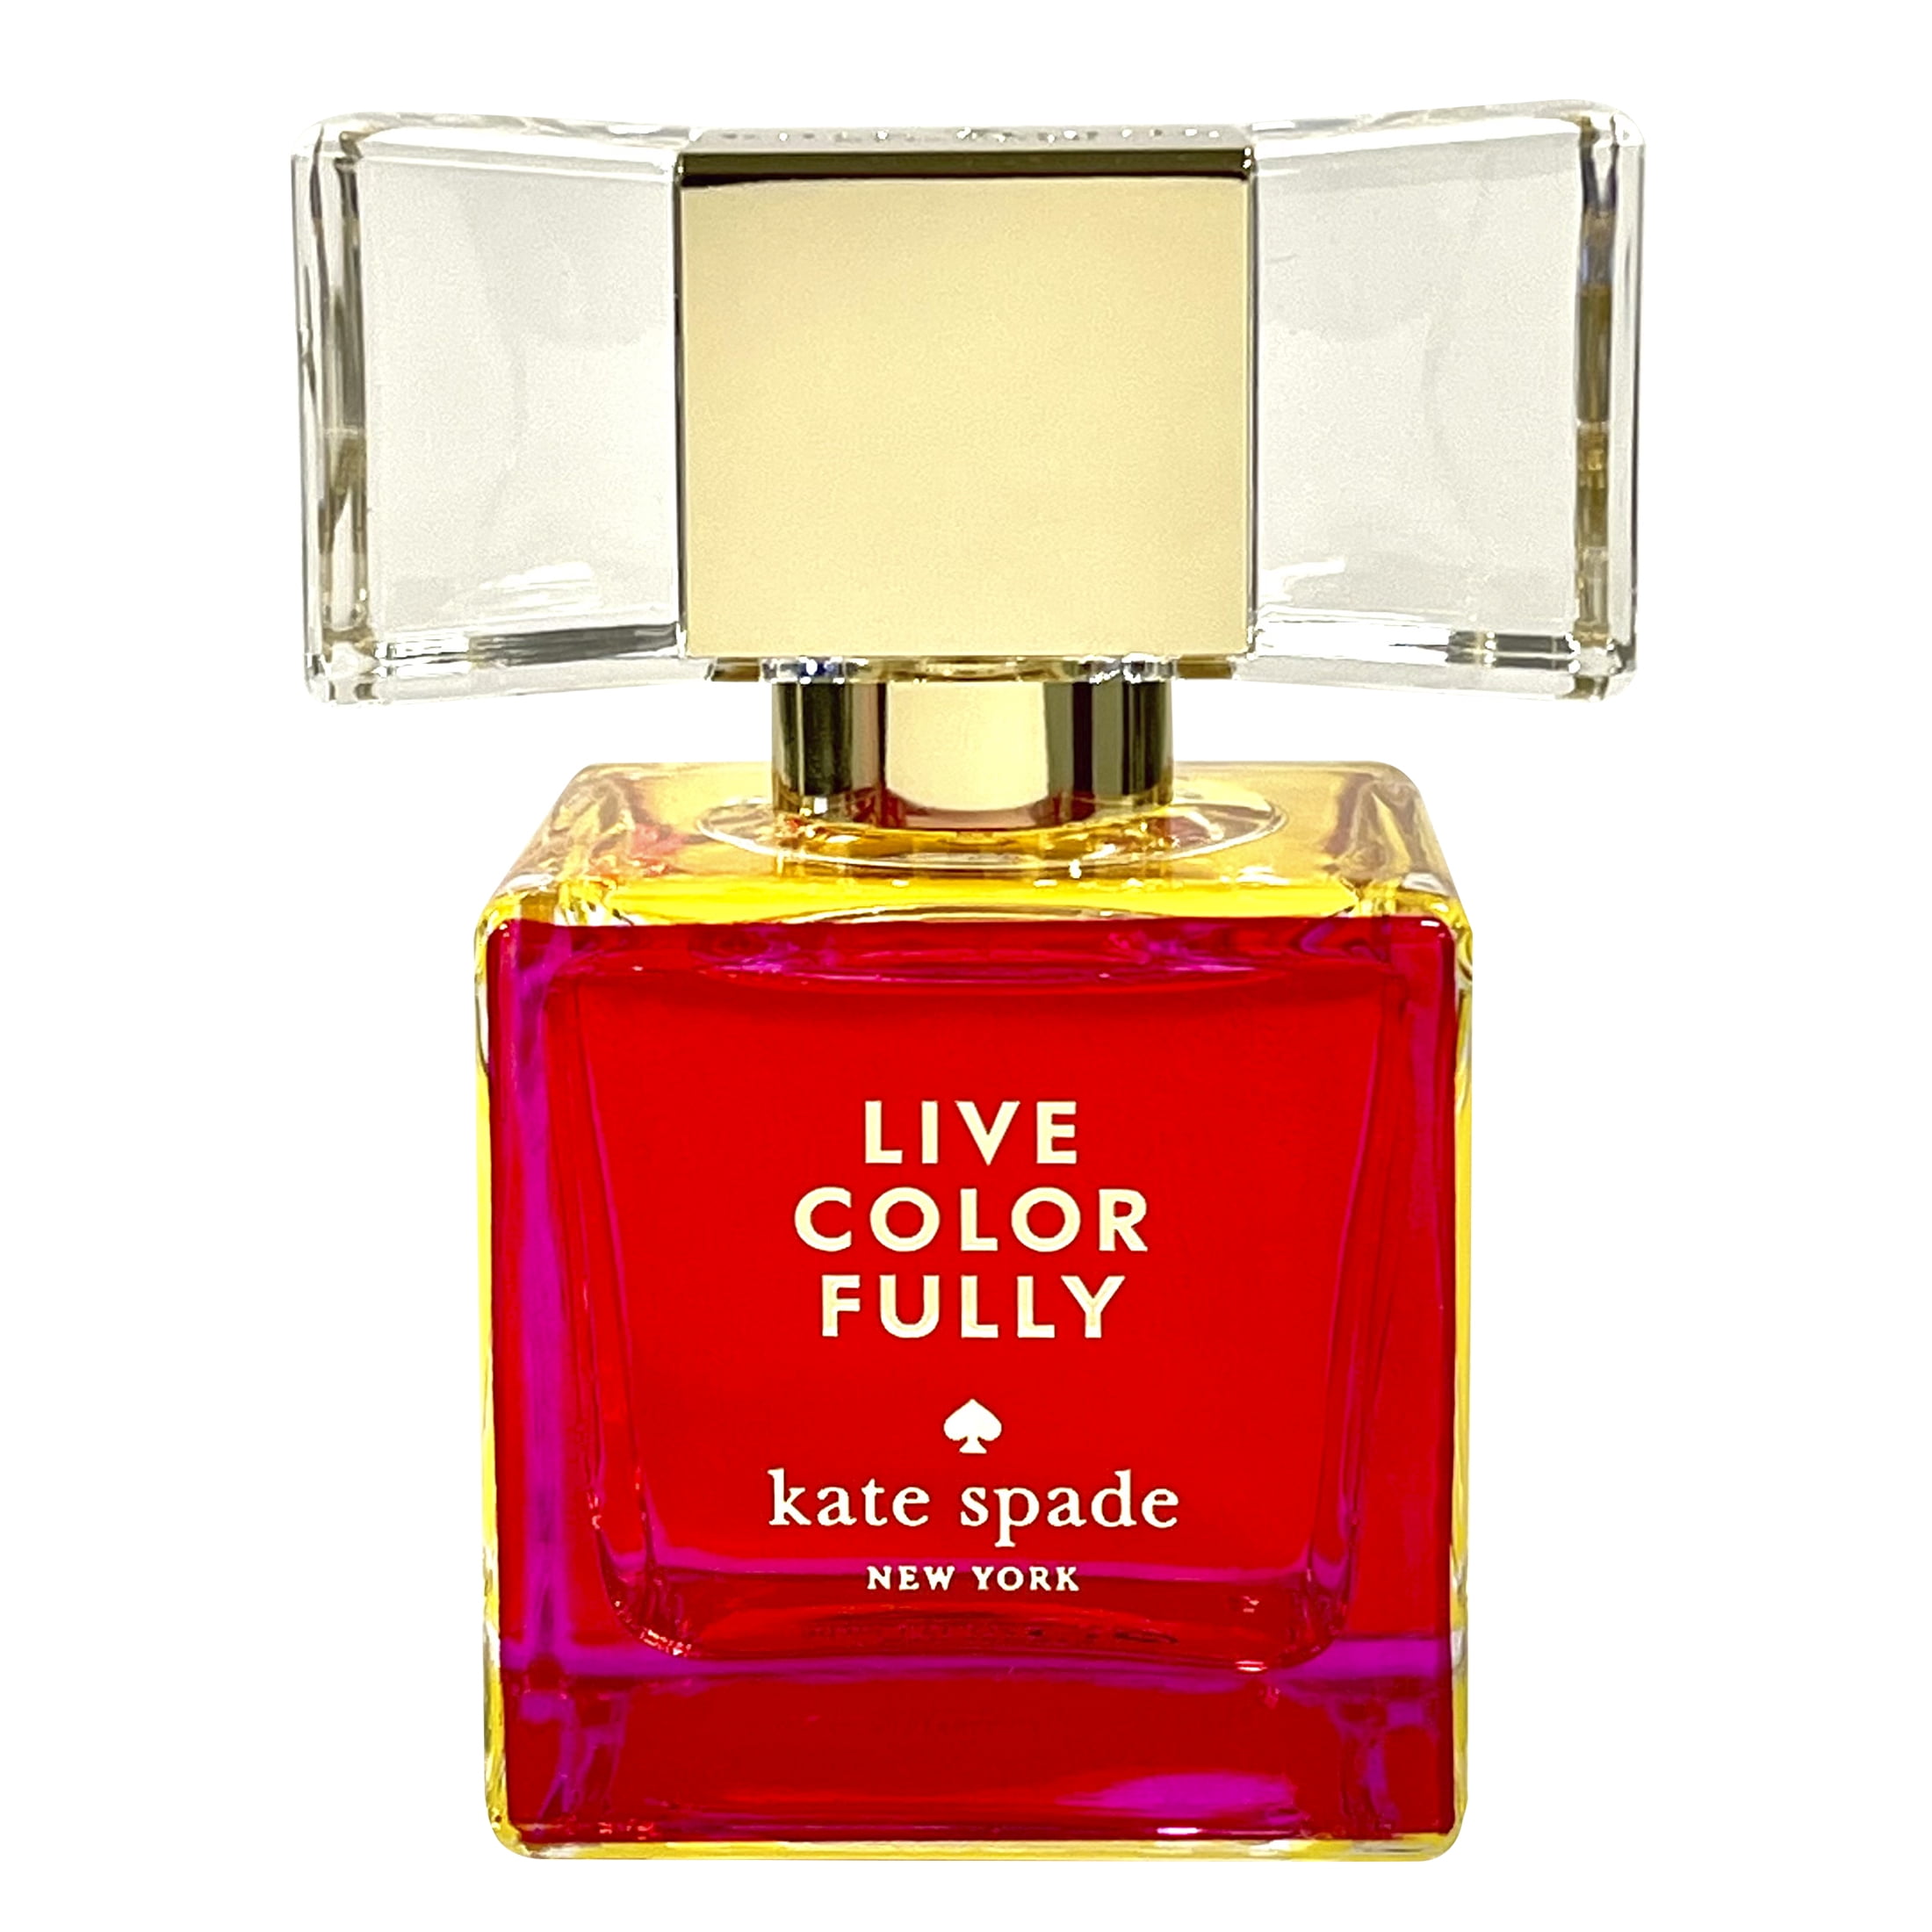 Kate Spade Live Colorfully Eau de Parfum, Perfume for Women, 1 oz